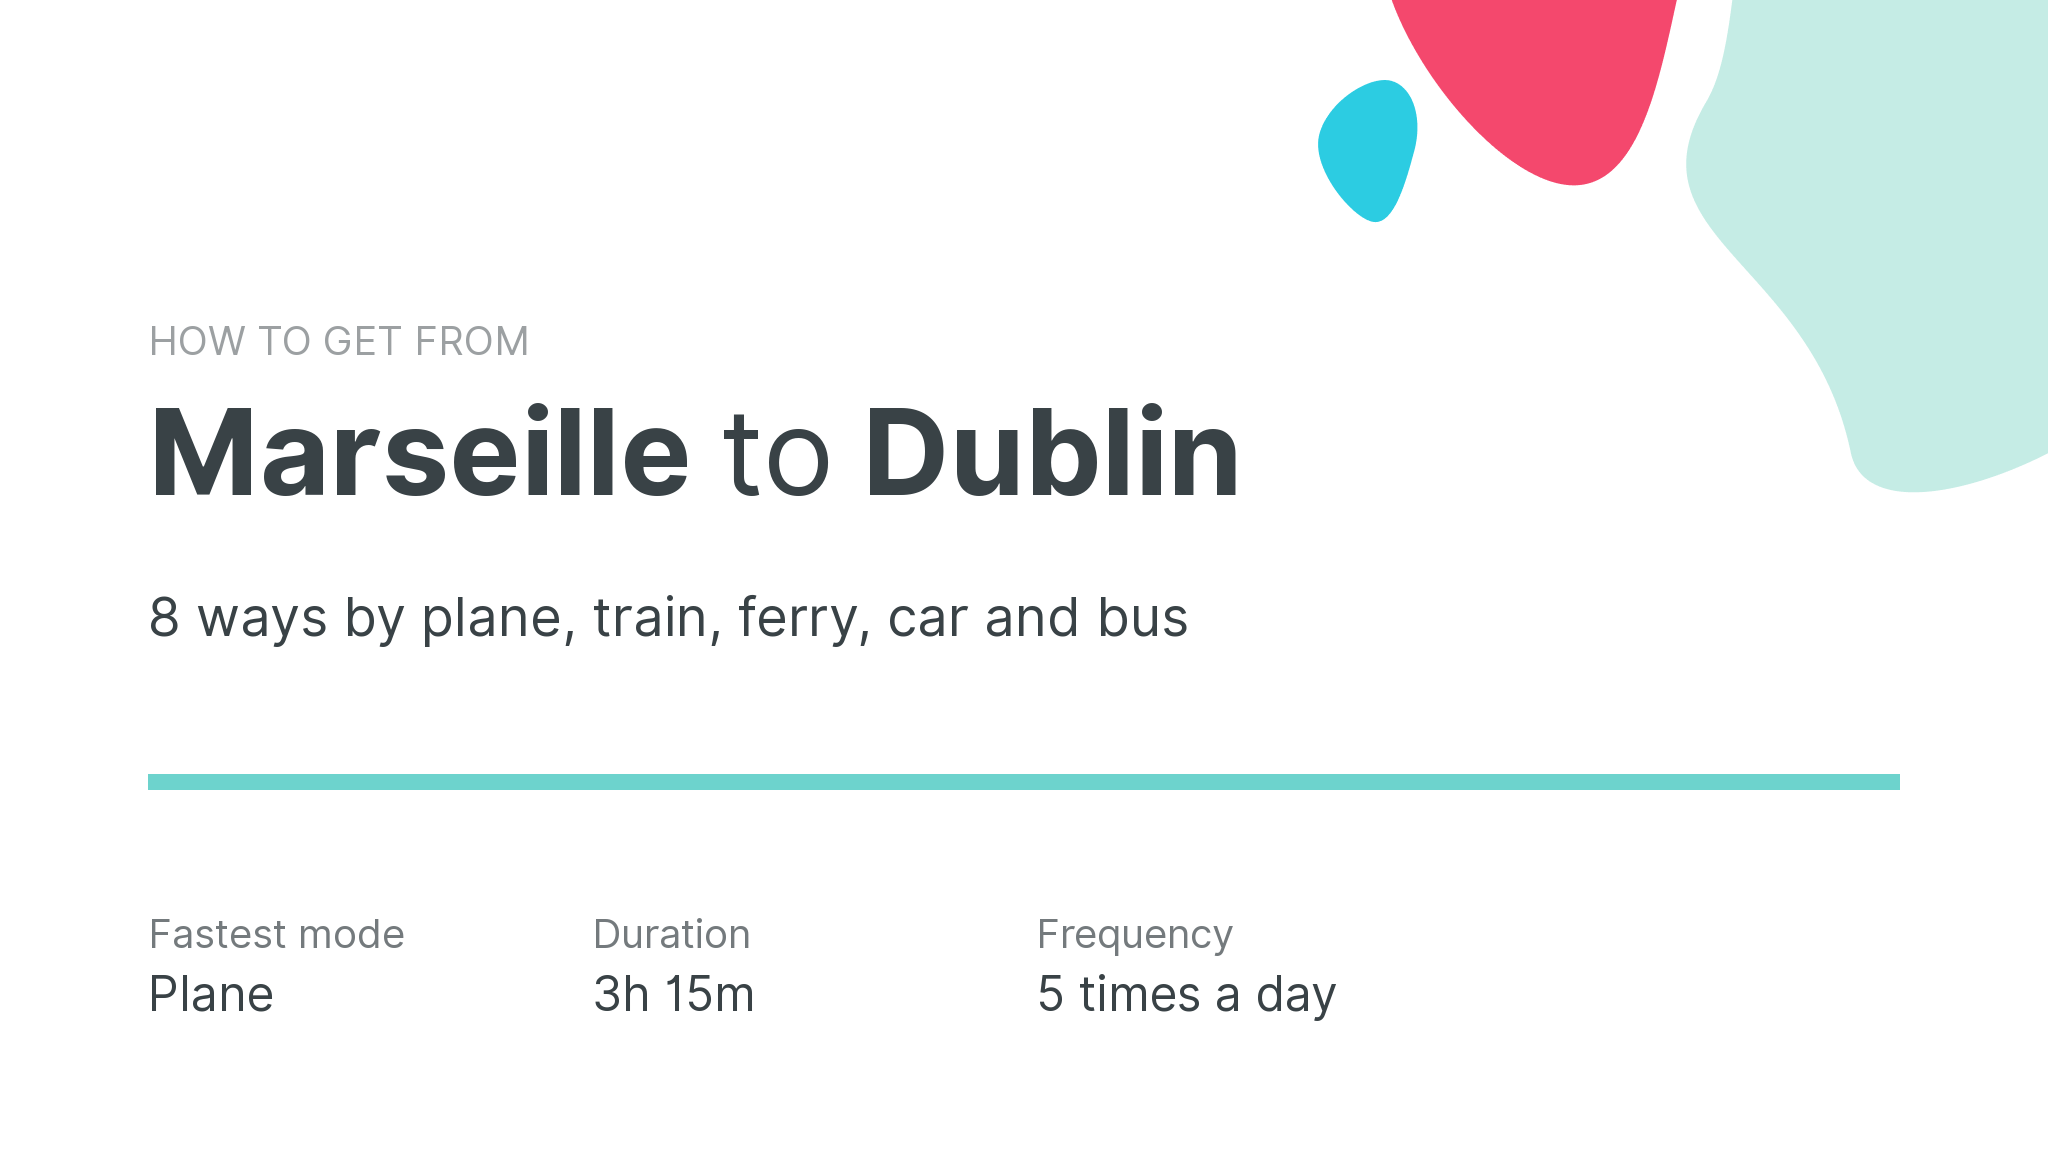 How do I get from Marseille to Dublin